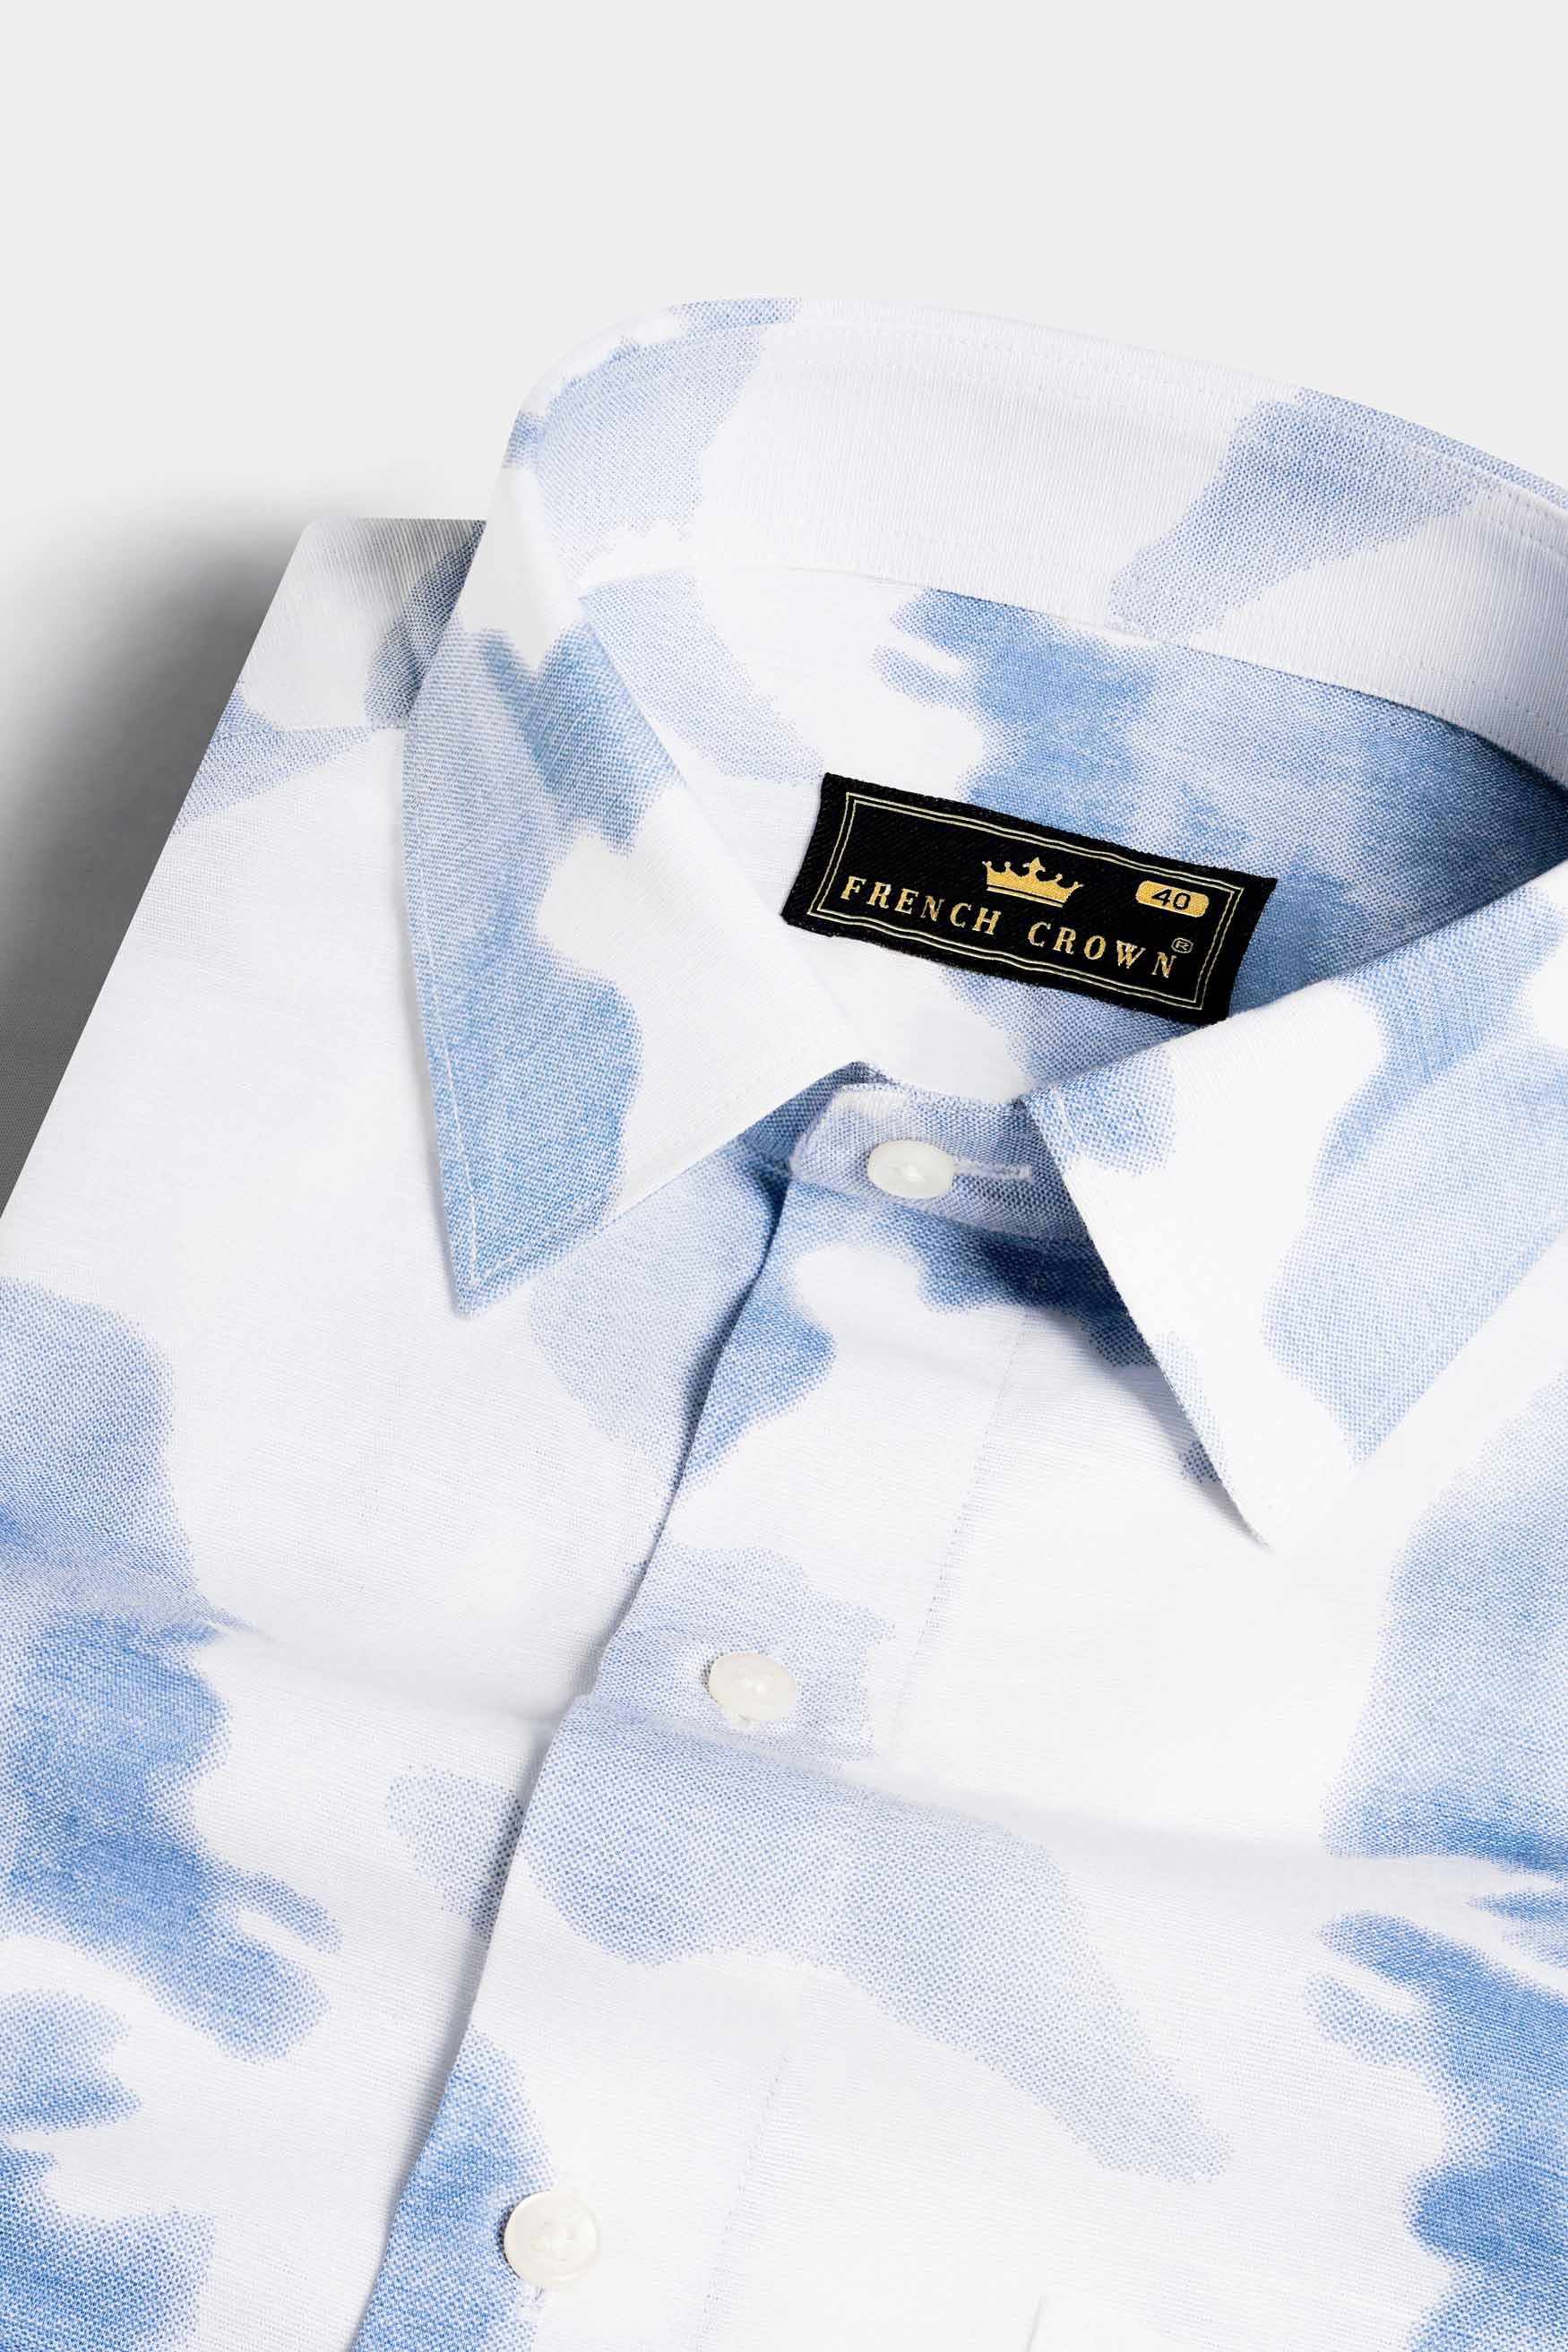 Bright White and Glacier Blue Tye & Die Luxurious Linen Shirt